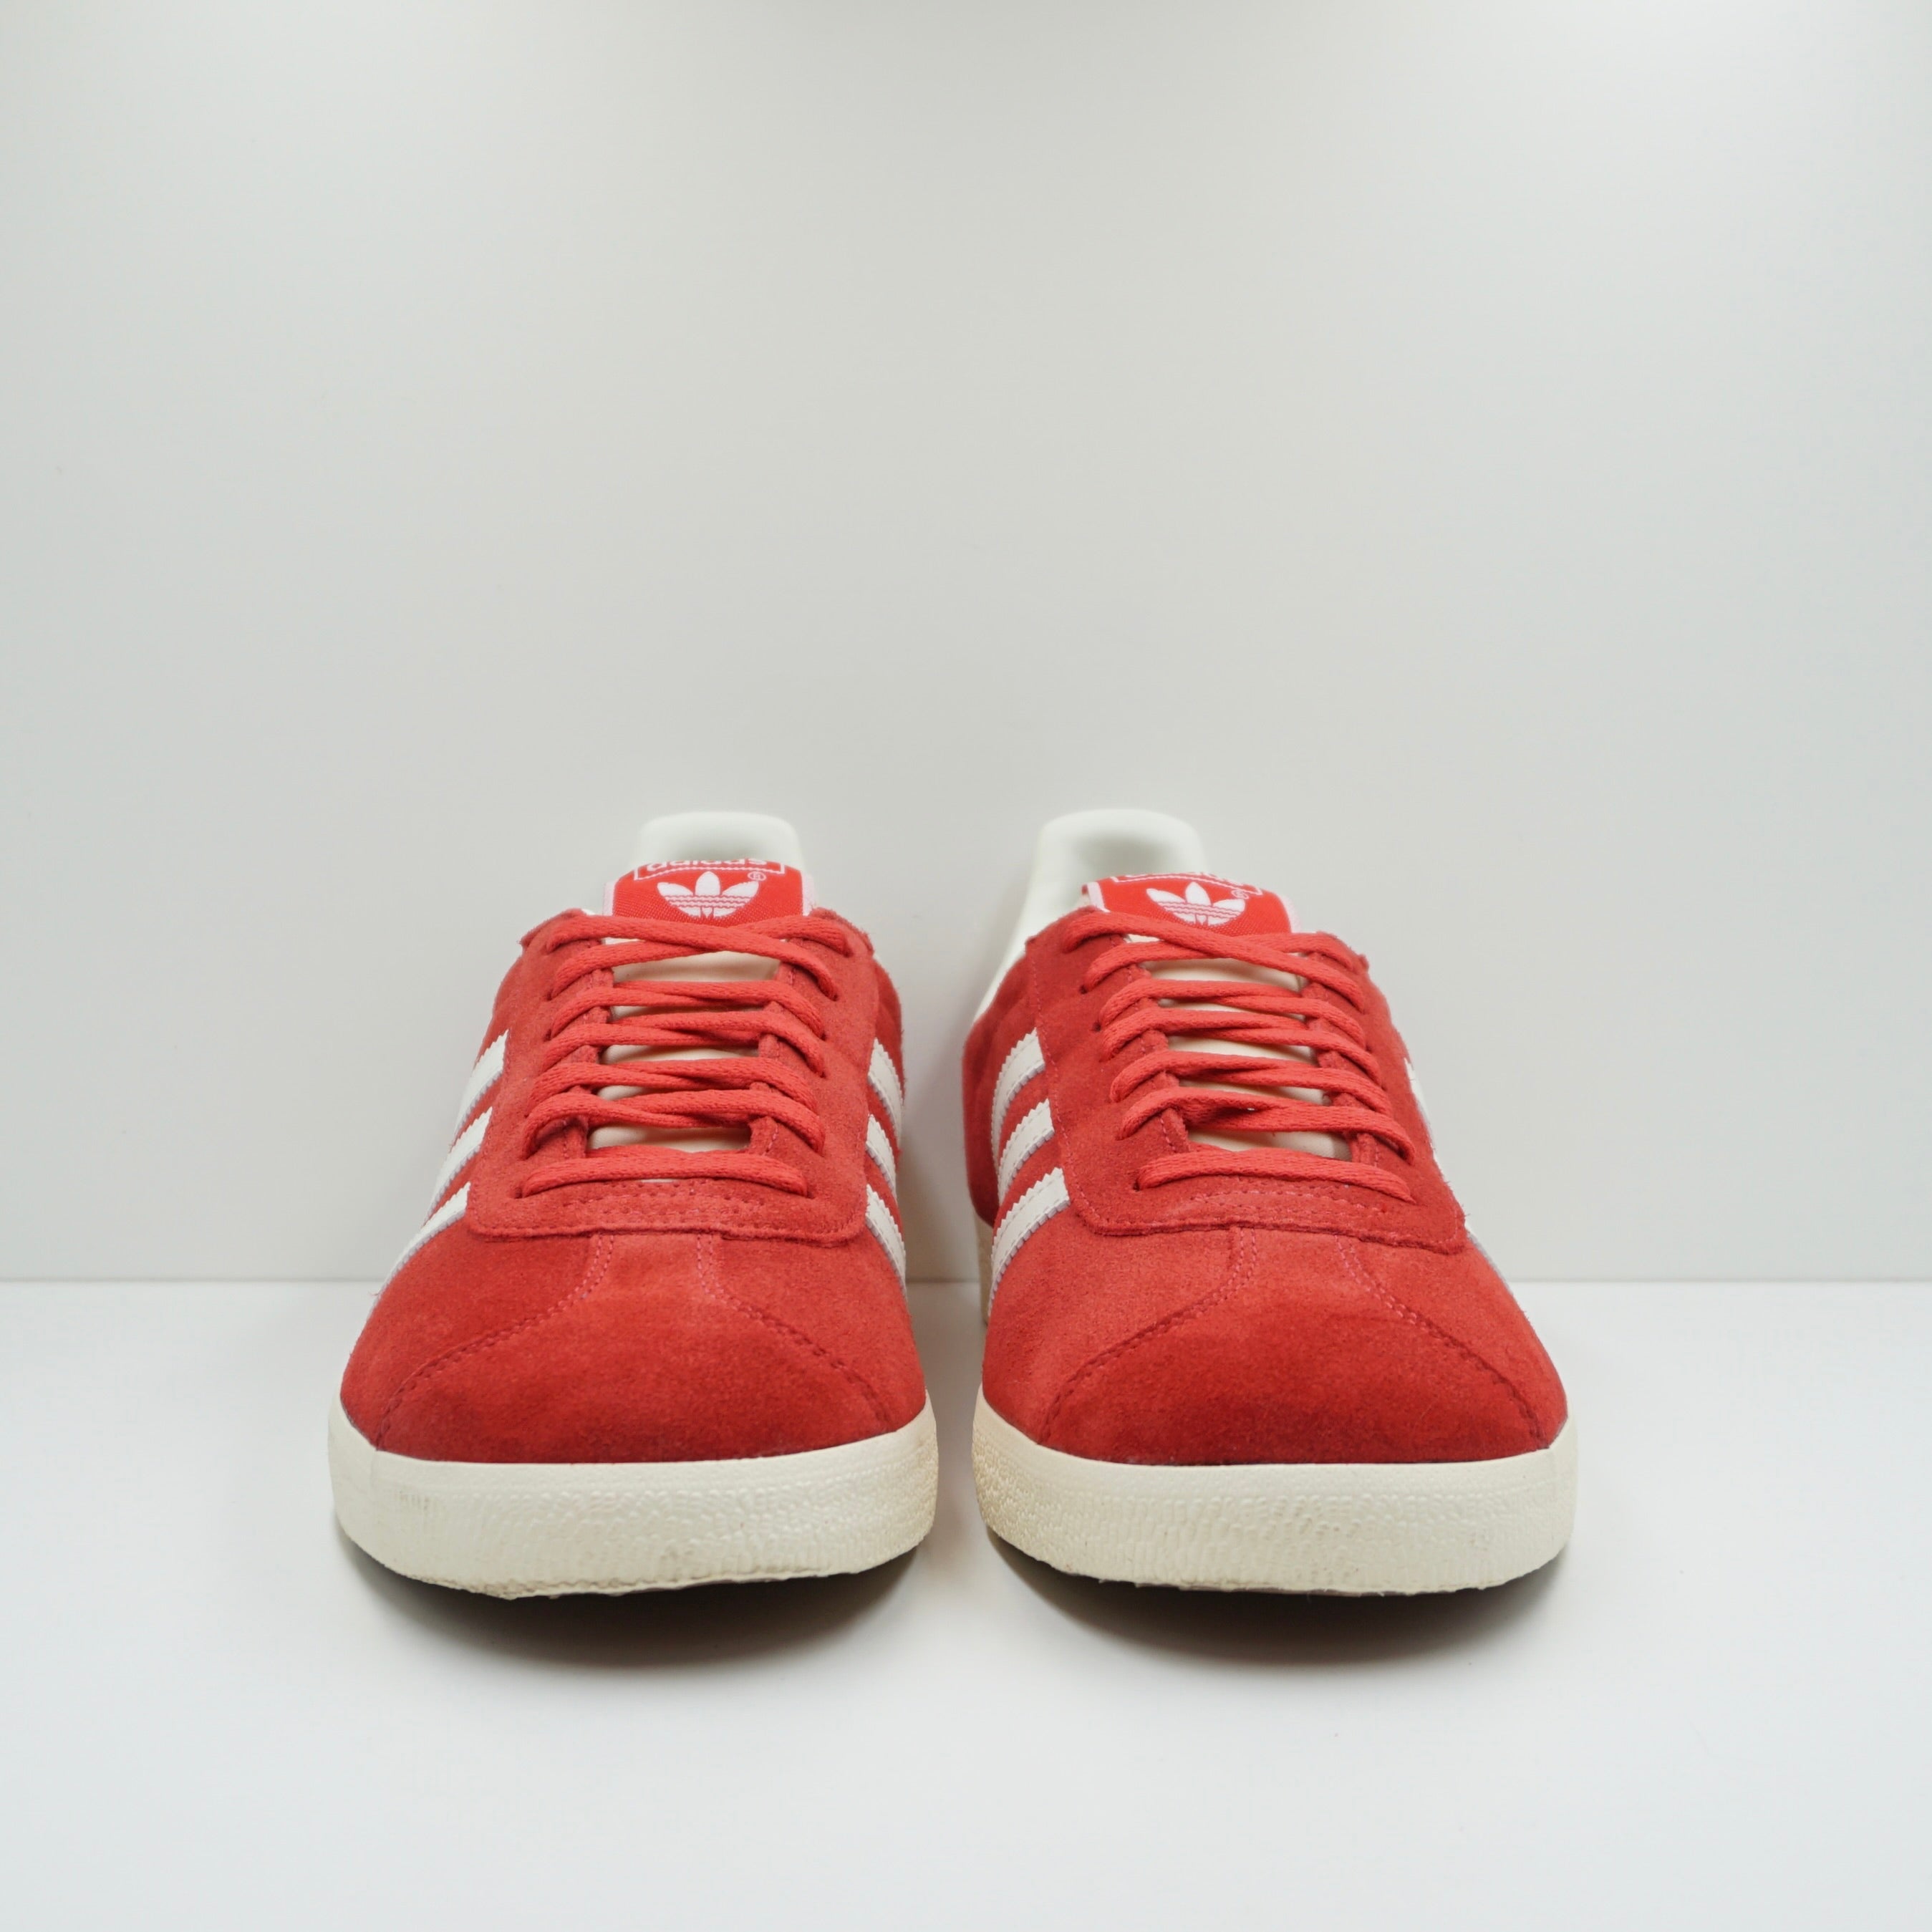 Adidas Originals Gazelle Red